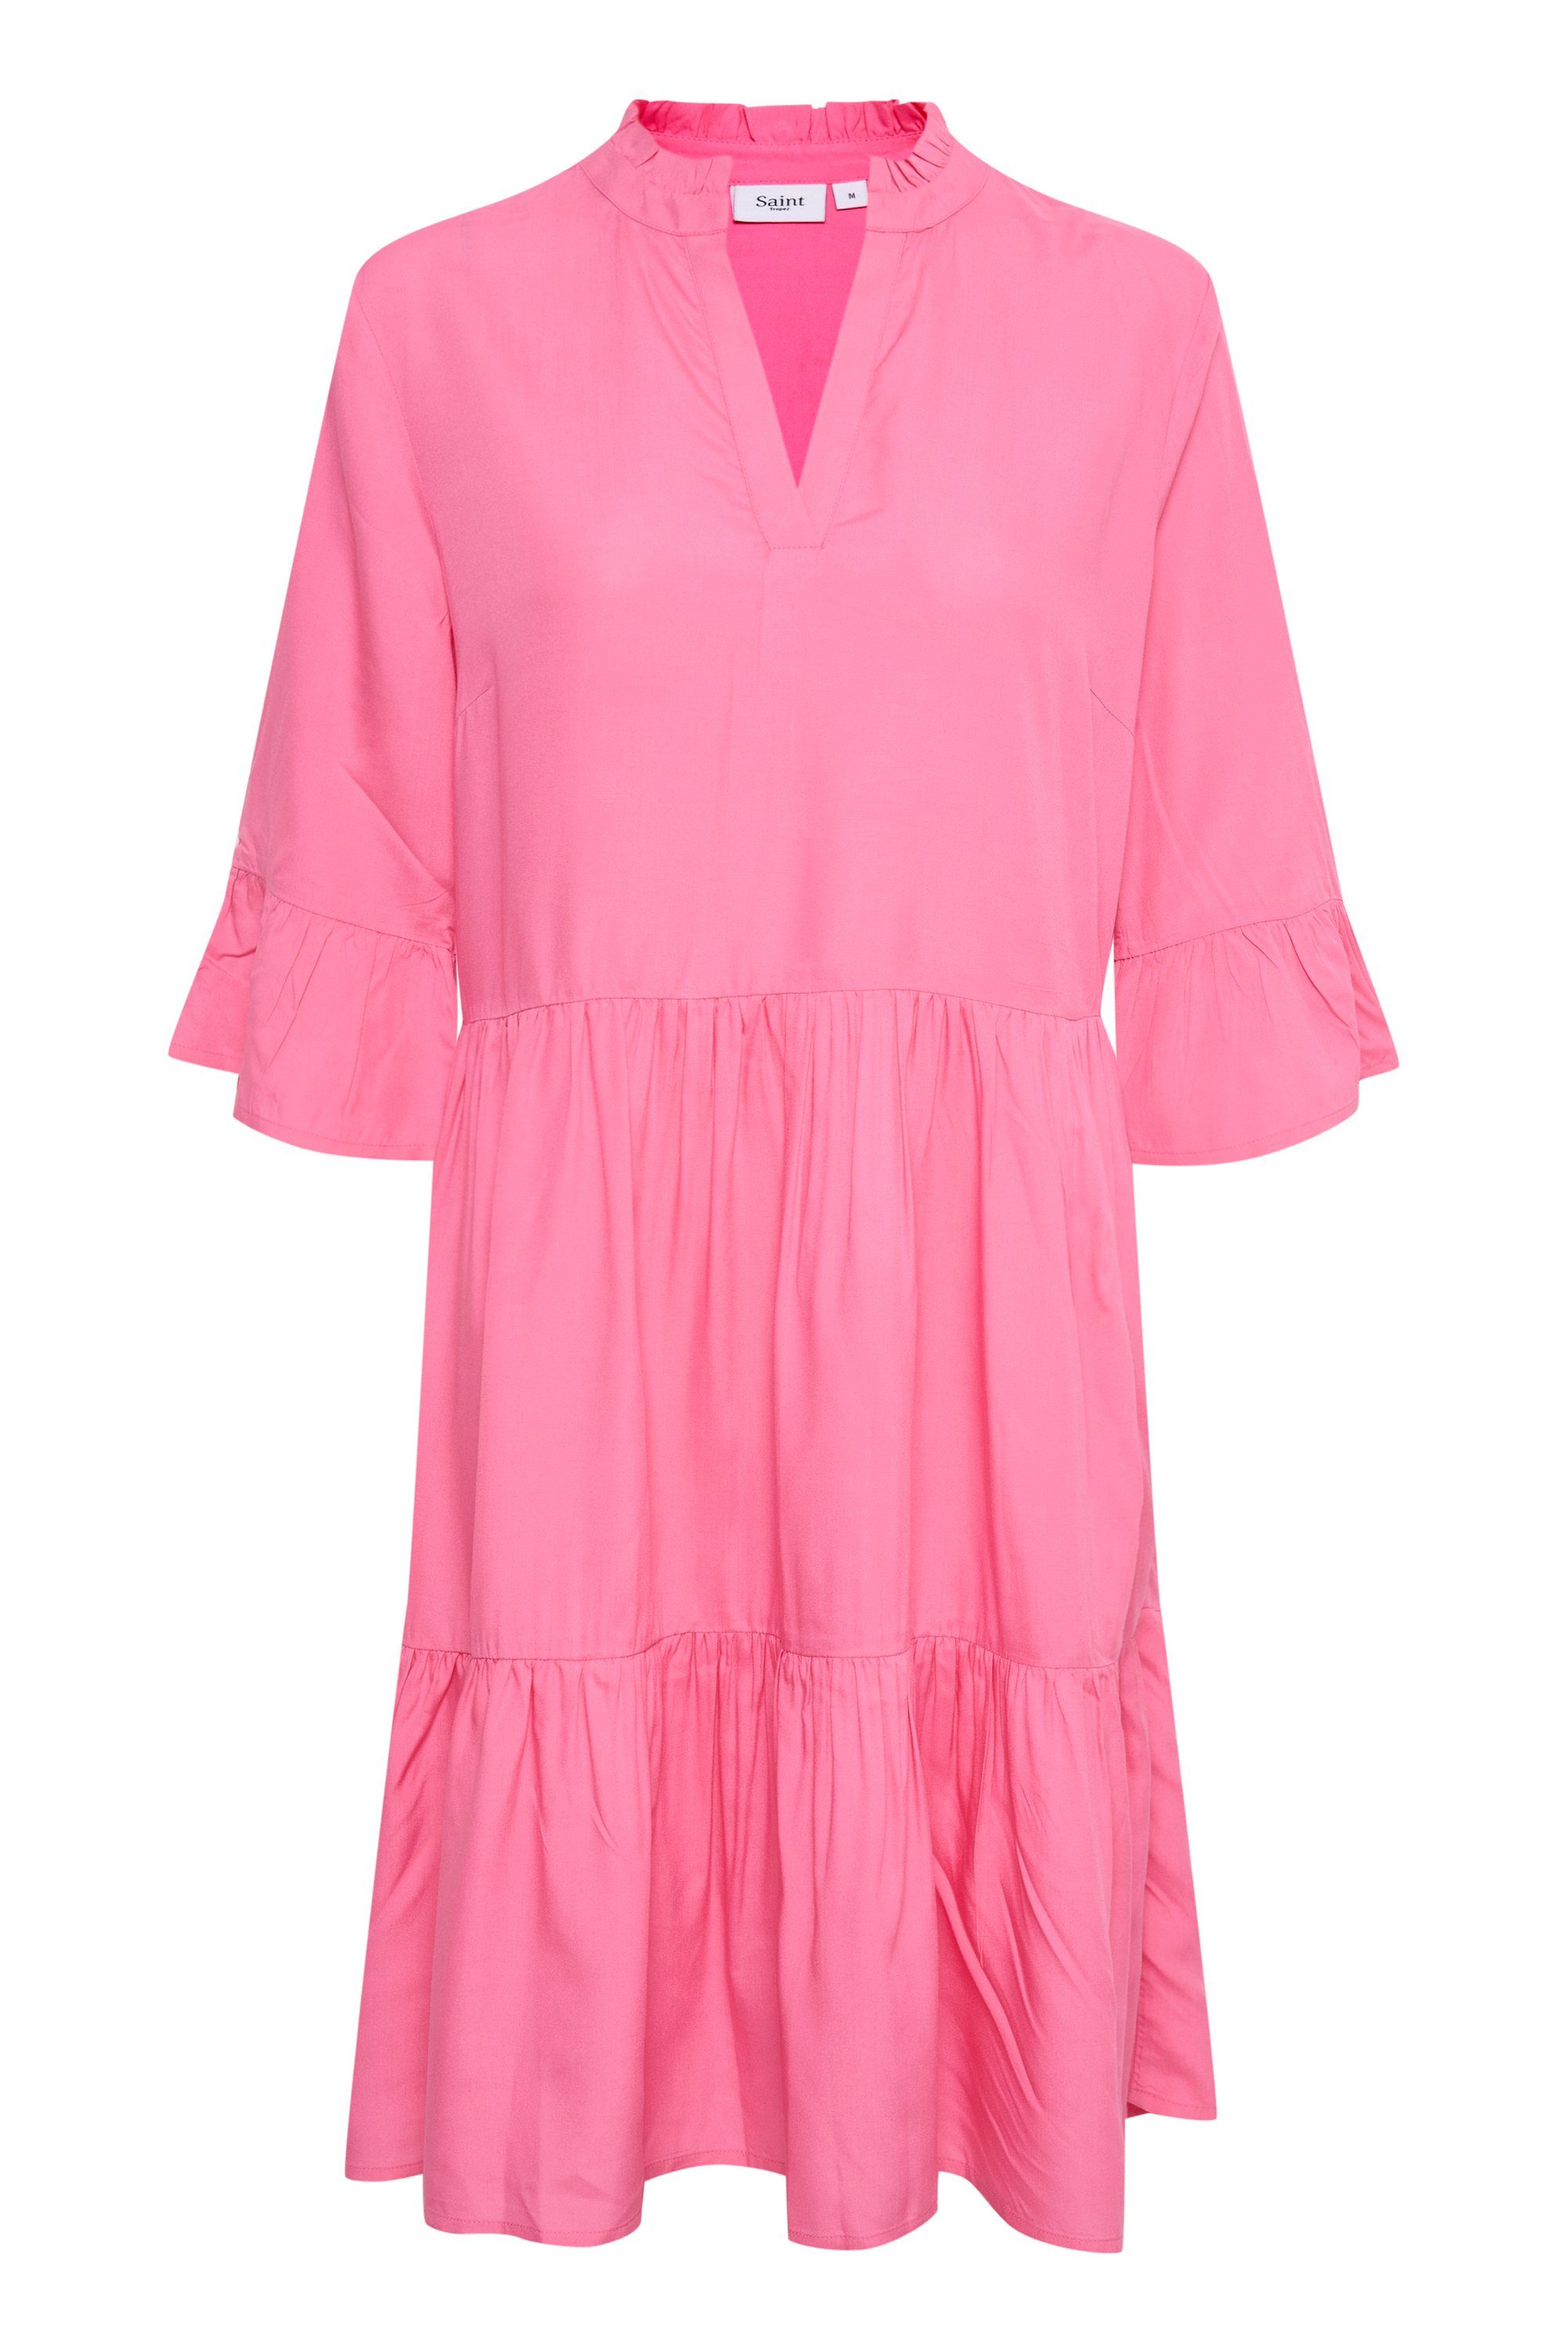 Saint Tropez Jerseykleid Kleid EdaSZ Azalea Pink